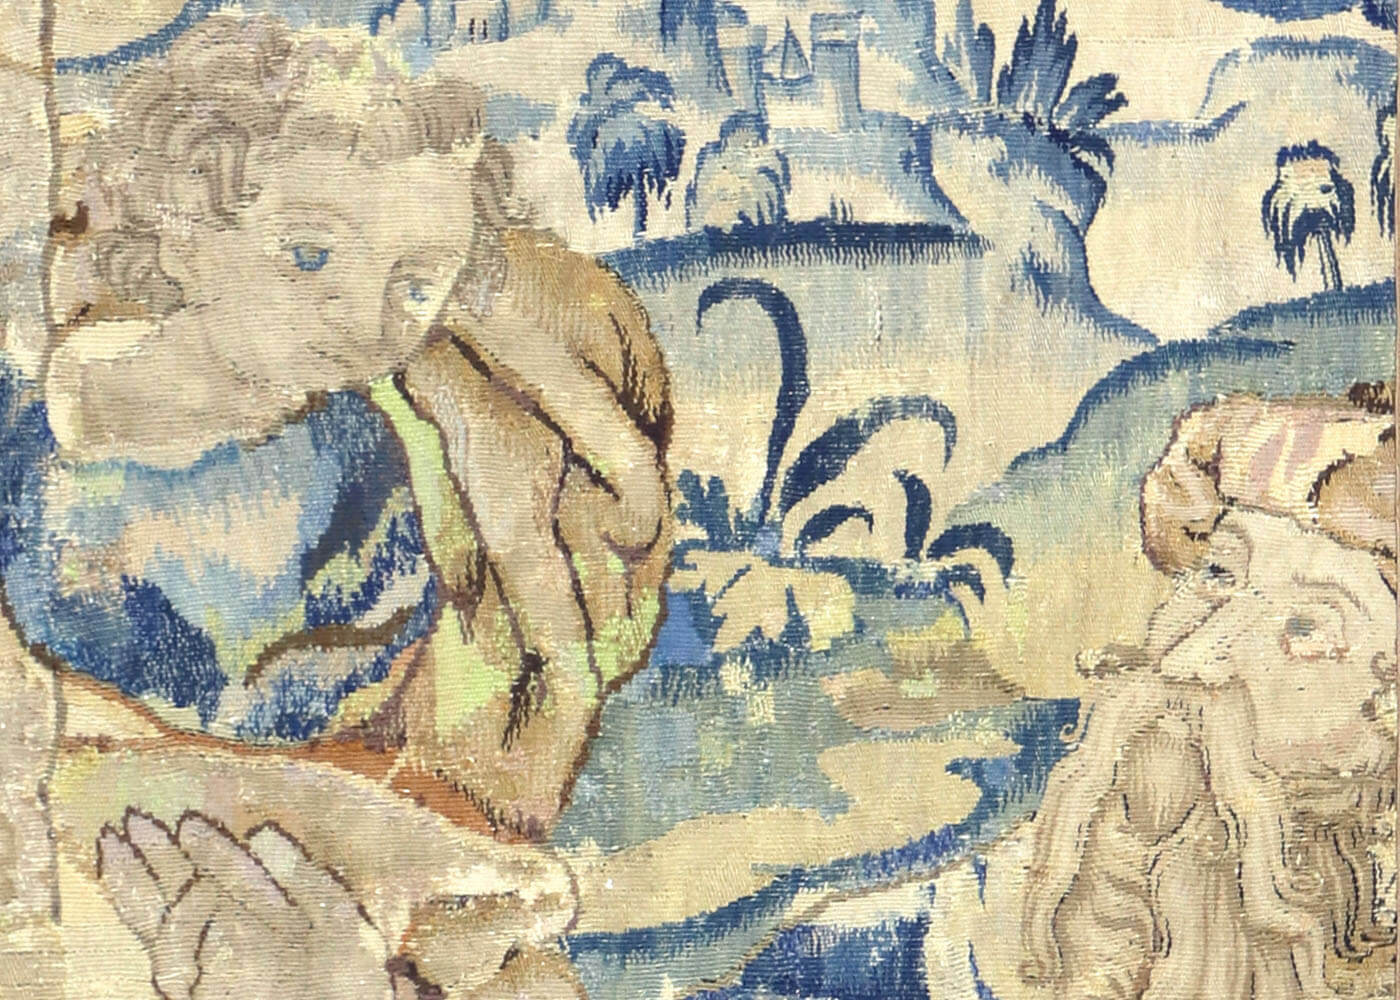 Antique Flemish Tapestry - 4'2" x 4'1"